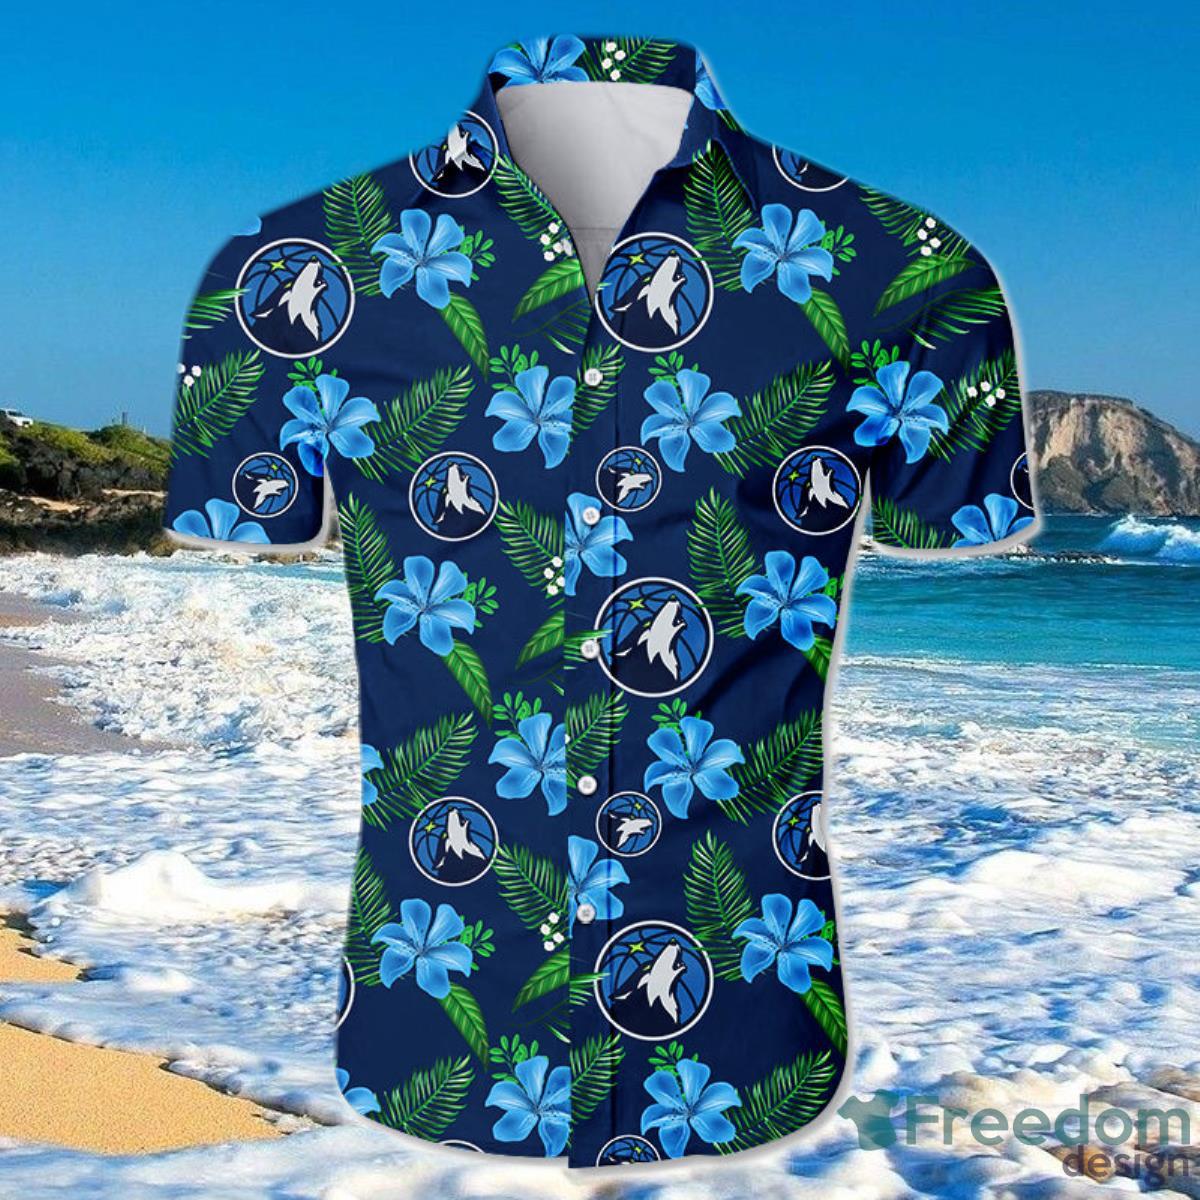 Minnesota Timberwolves Hawaiian Shirt For Men And Women Small Flowers -  Freedomdesign